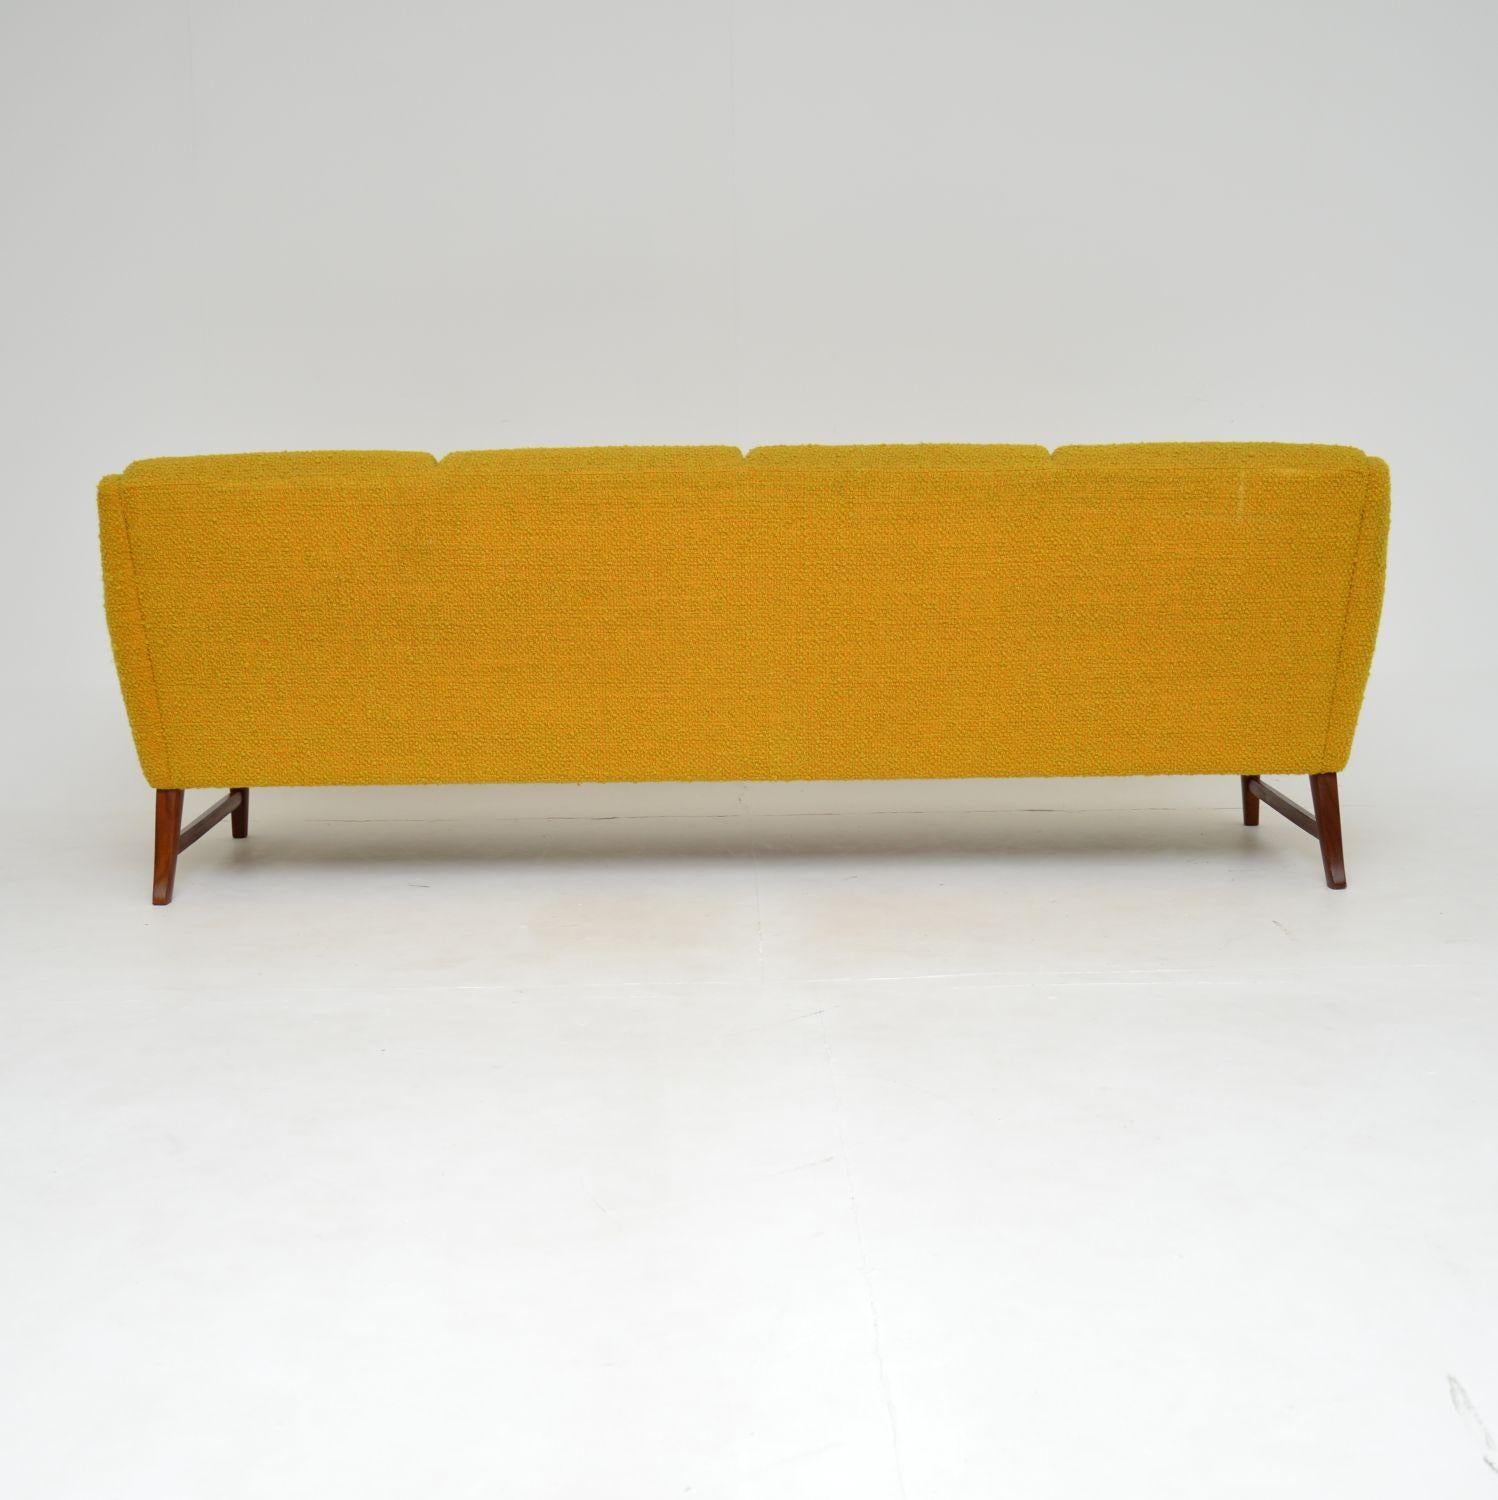 1960's Norwegian Vintage Teak Sofa in Mustard Yellow Boucle 1